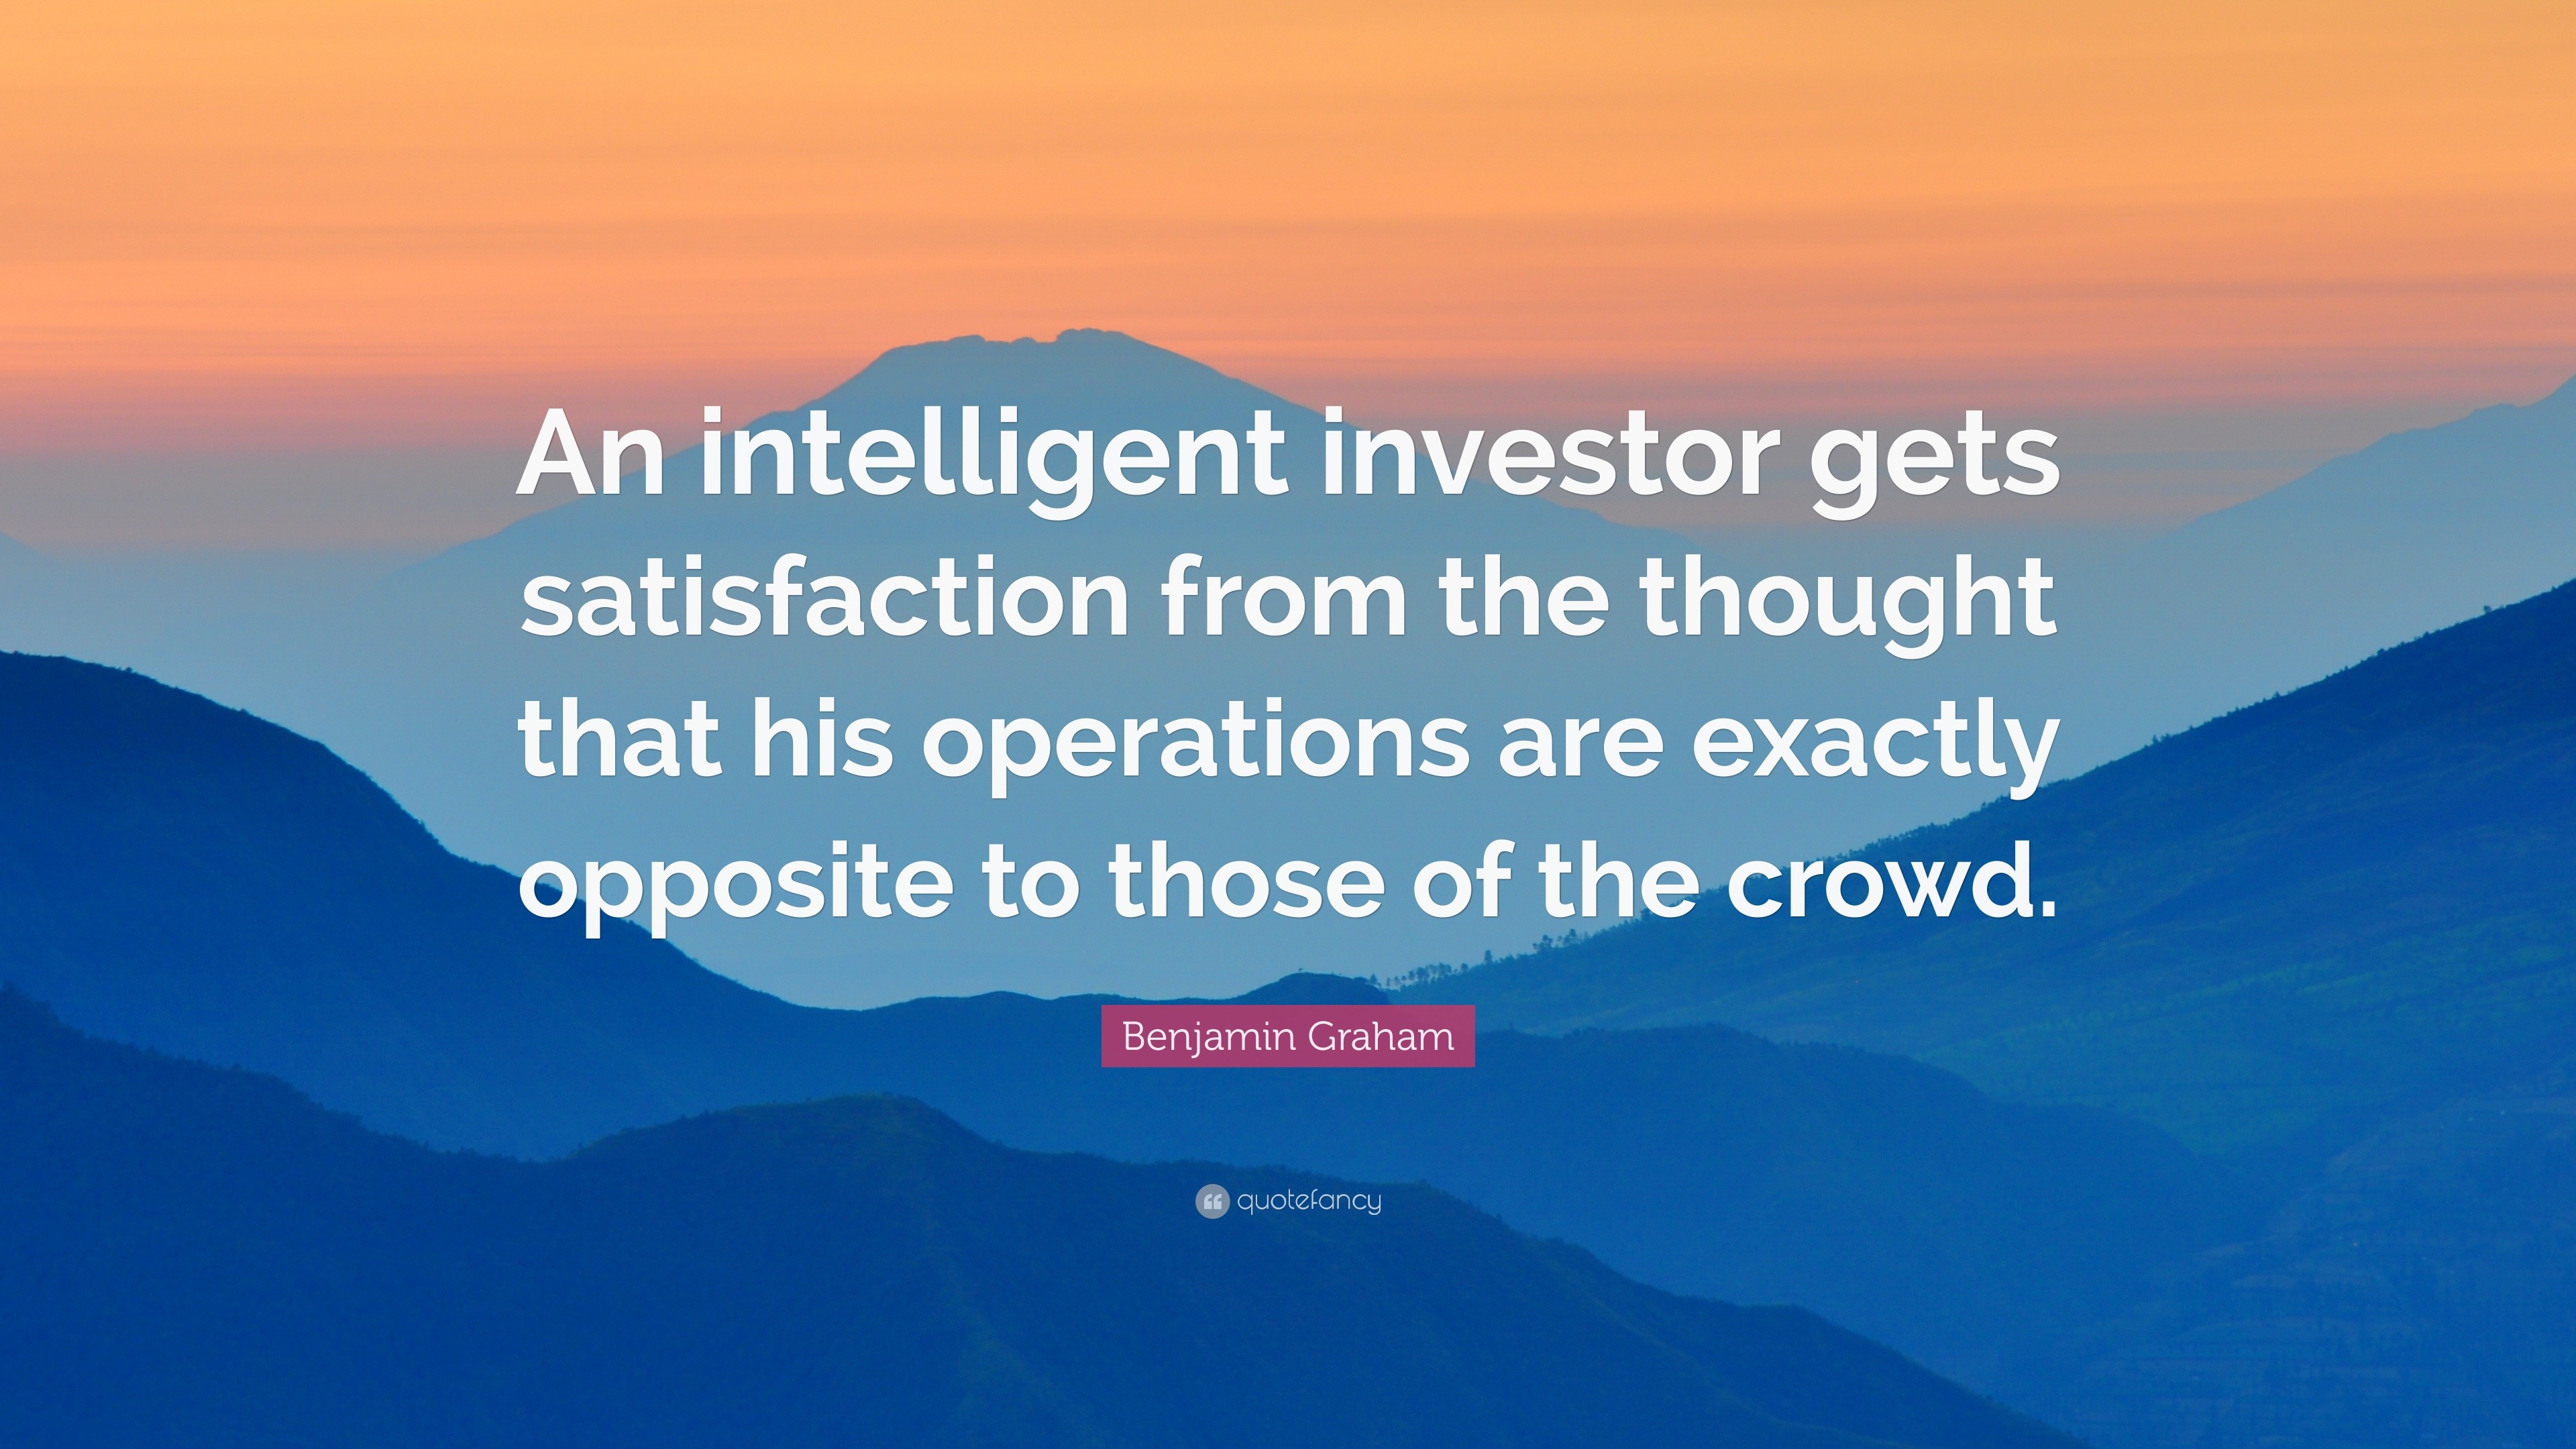 Benjamin Graham Quote: “An intelligent investor gets satisfaction from ...